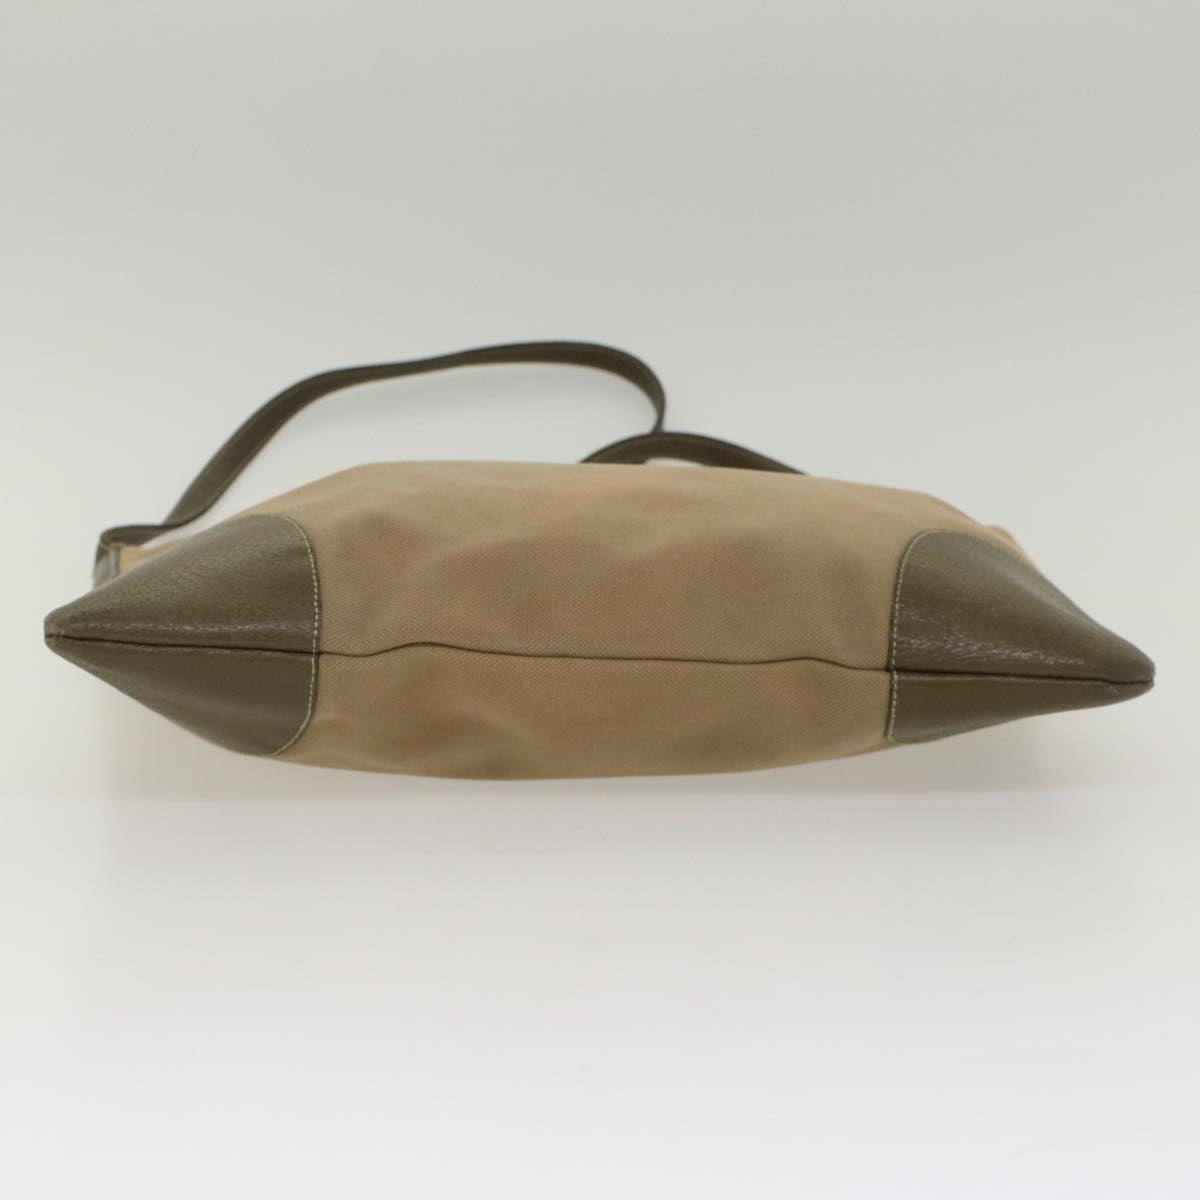 PRADA Shoulder Bag Canvas Leather Beige Auth cl696